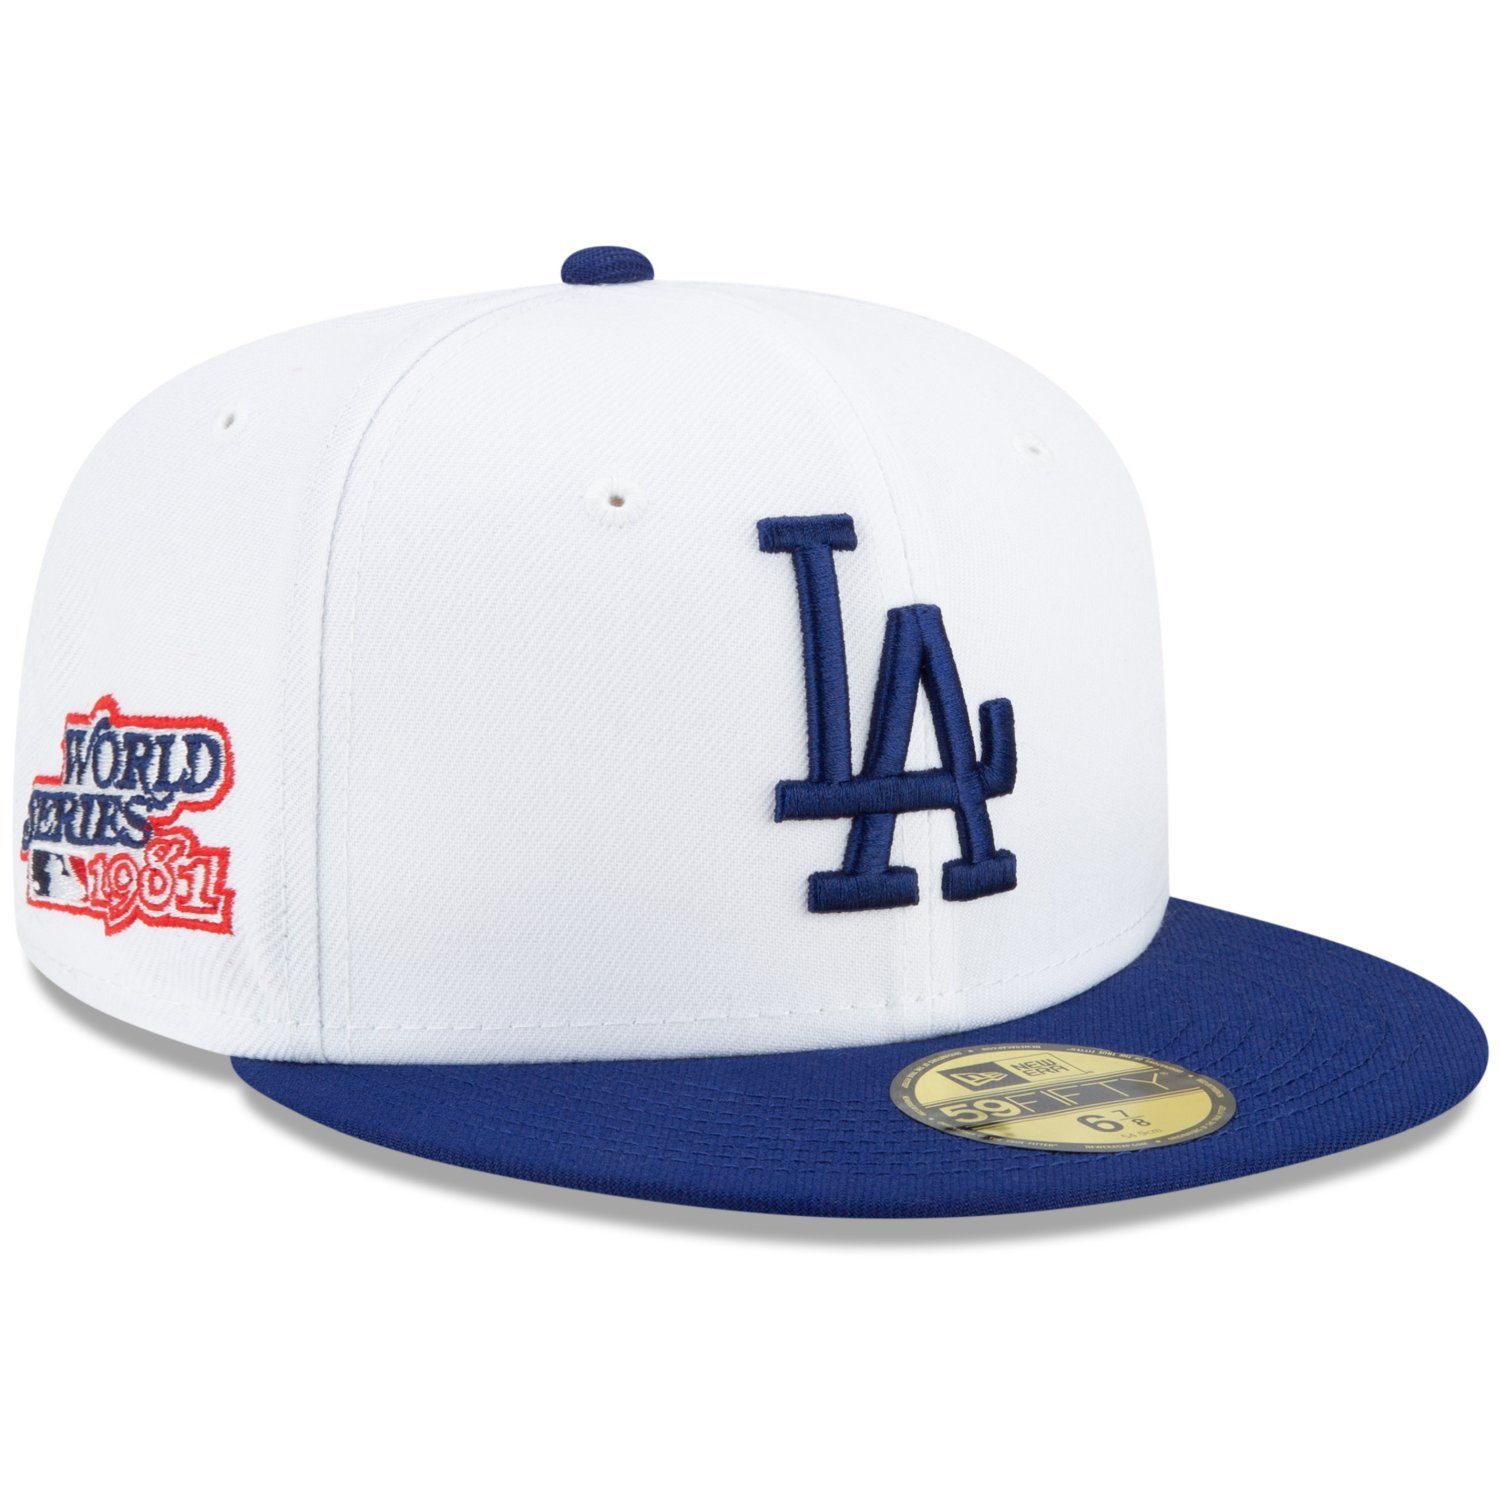 New Era Fitted Cap 59Fifty WORLD SERIES 1981 LA Dodgers